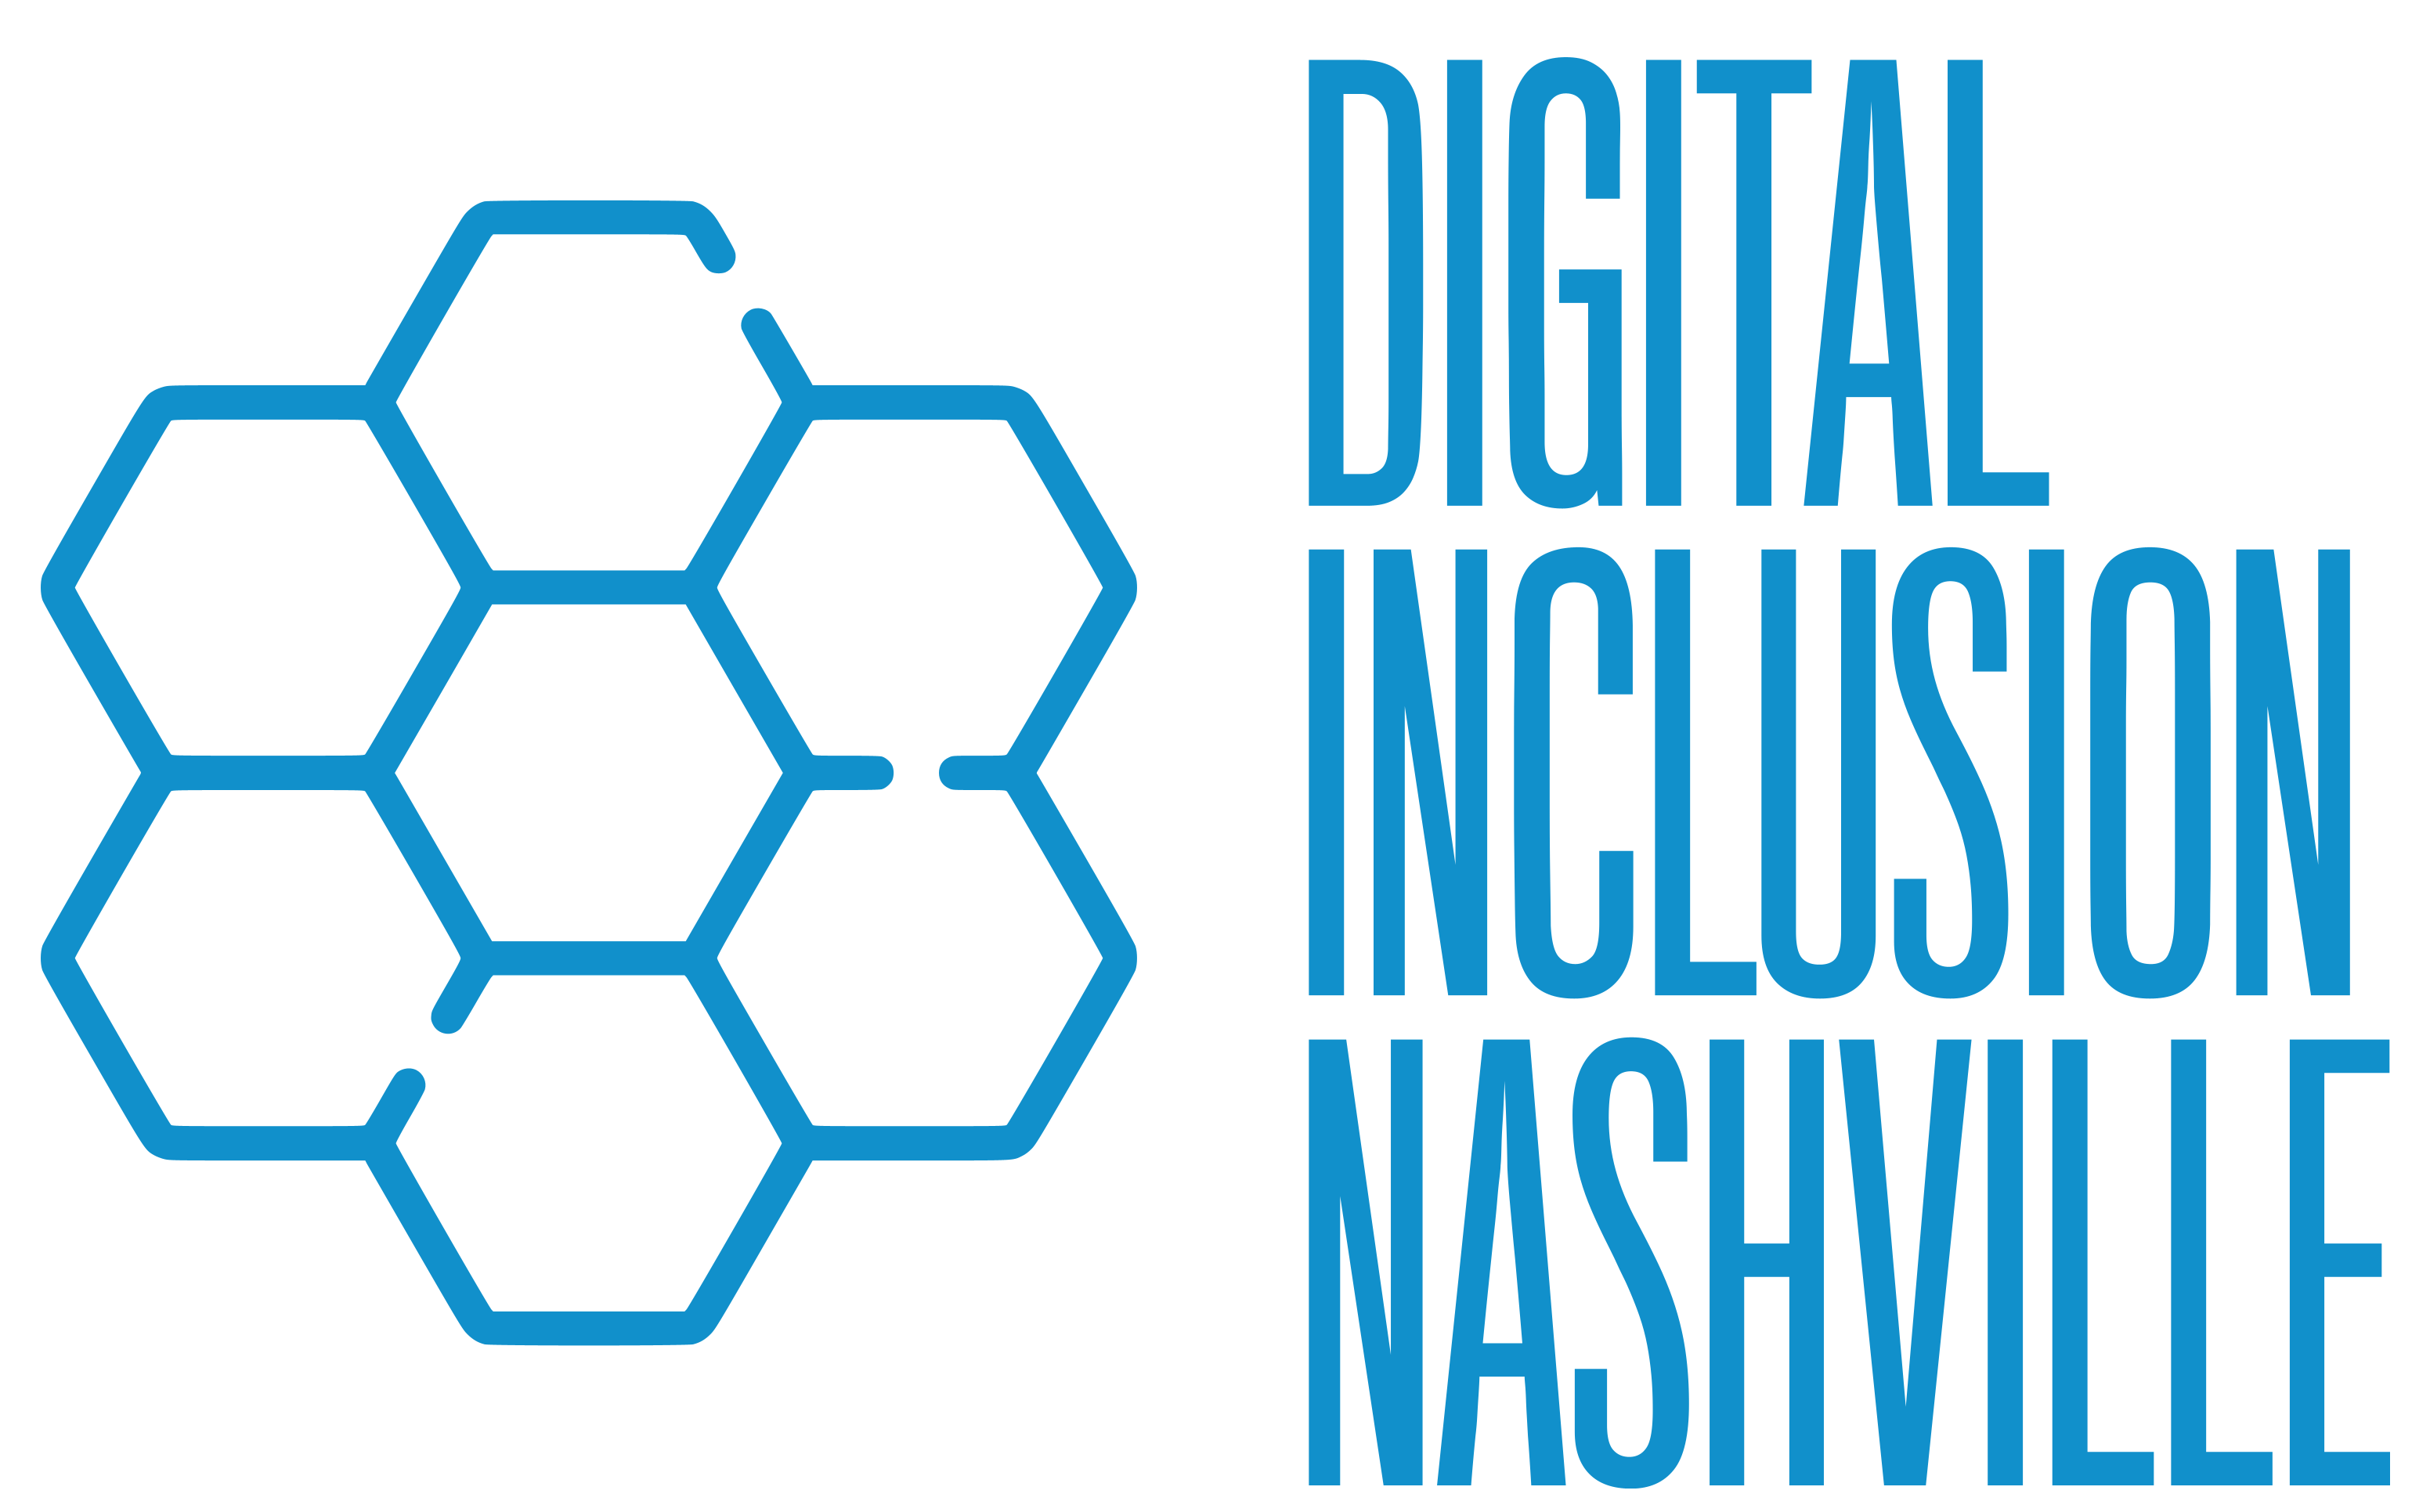 Digital Inclusion Nashville Logo